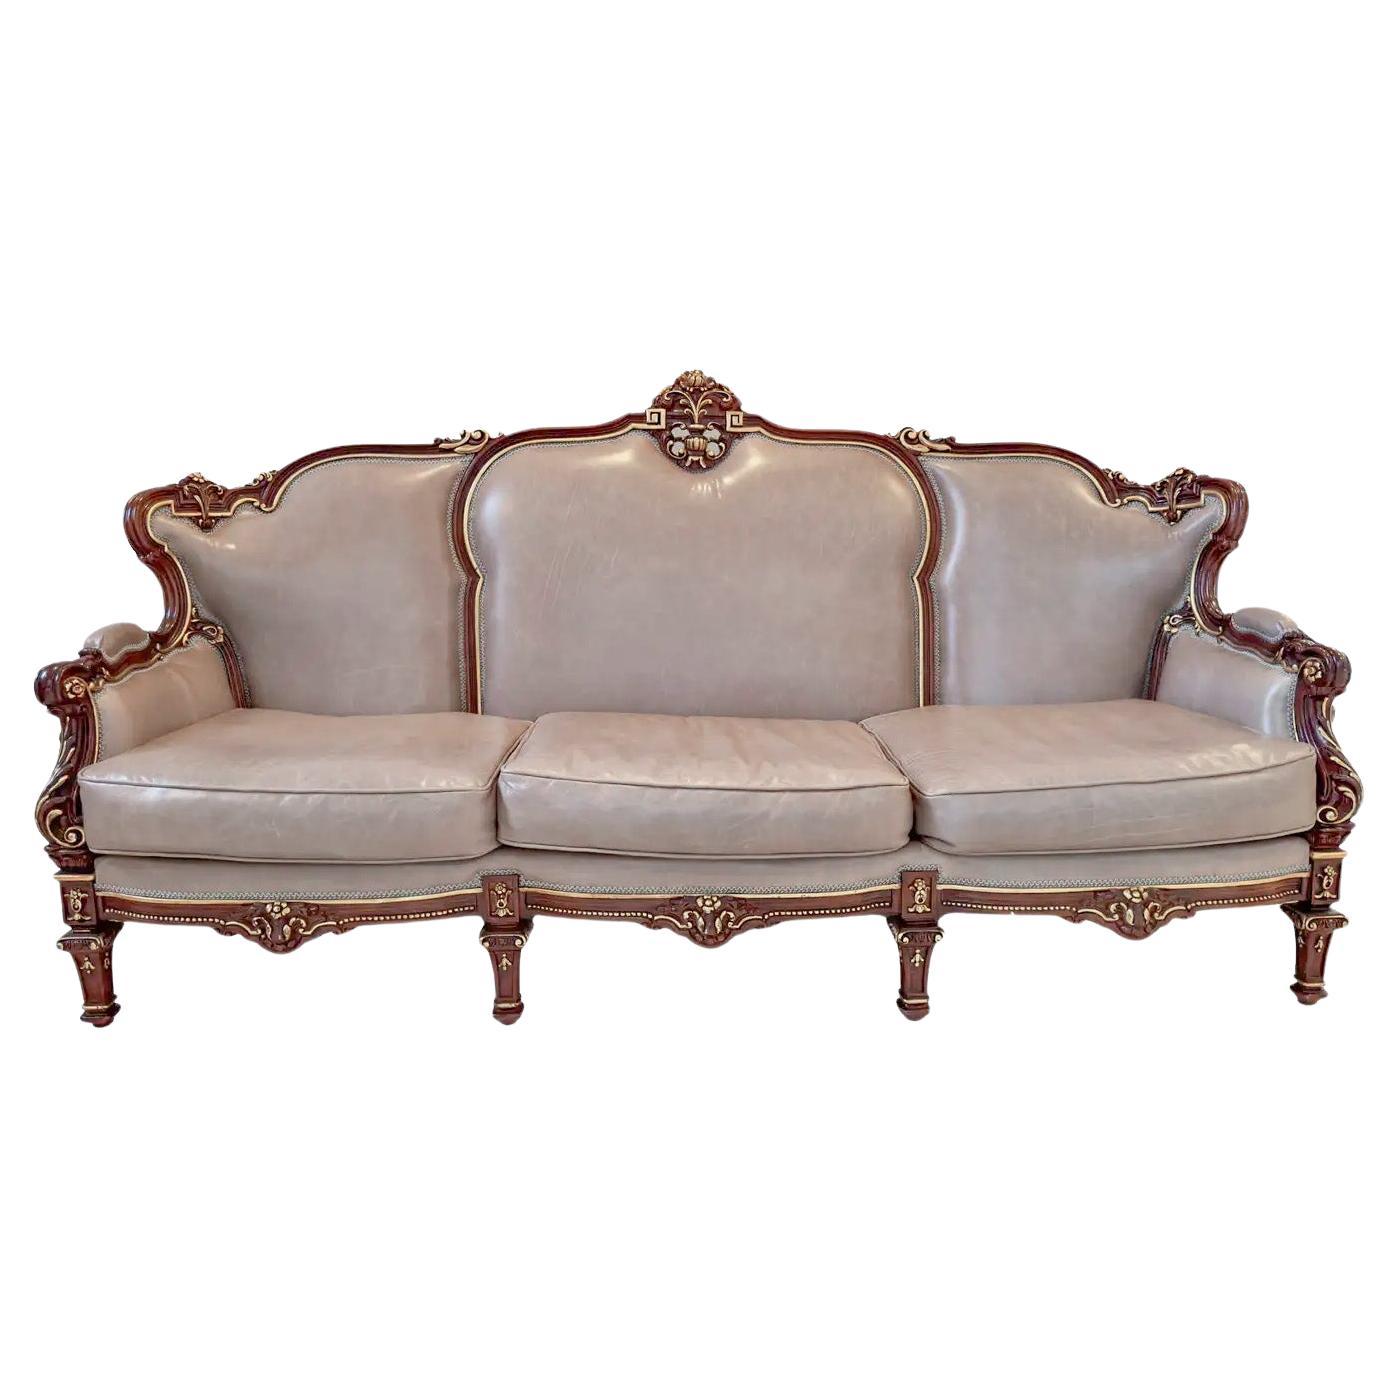 Italienisches Sofa im Rokoko-Stil mit feinem Lederbezug in Taupe / Grau und Mahagoni 